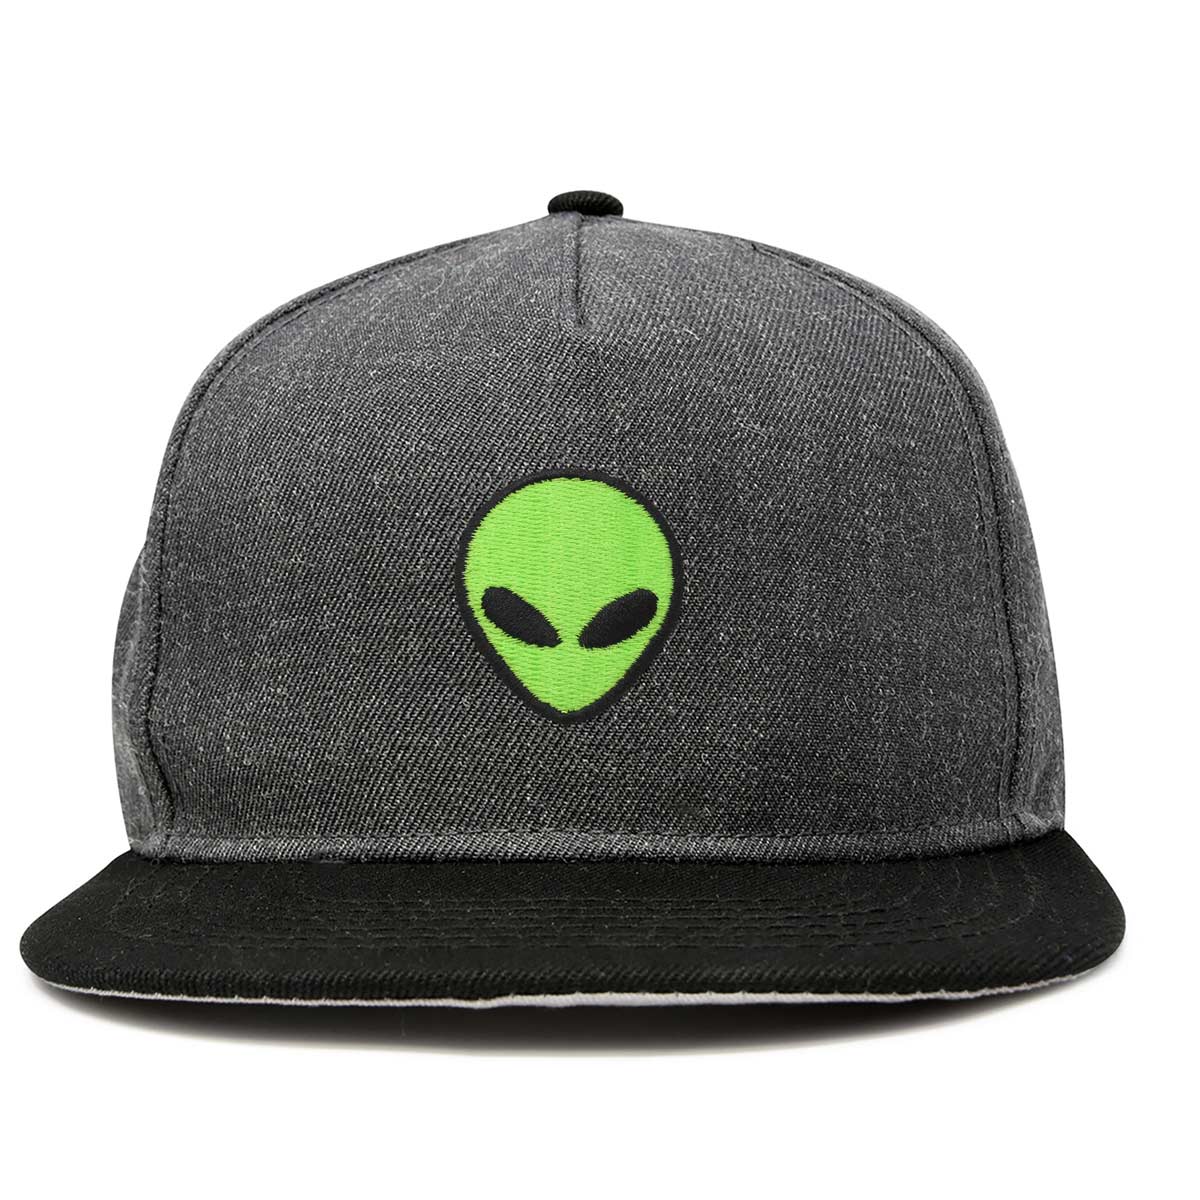 Dalix Alien Snapback Flat Bill Baseball Hat Embroidered Cap Mens in Black